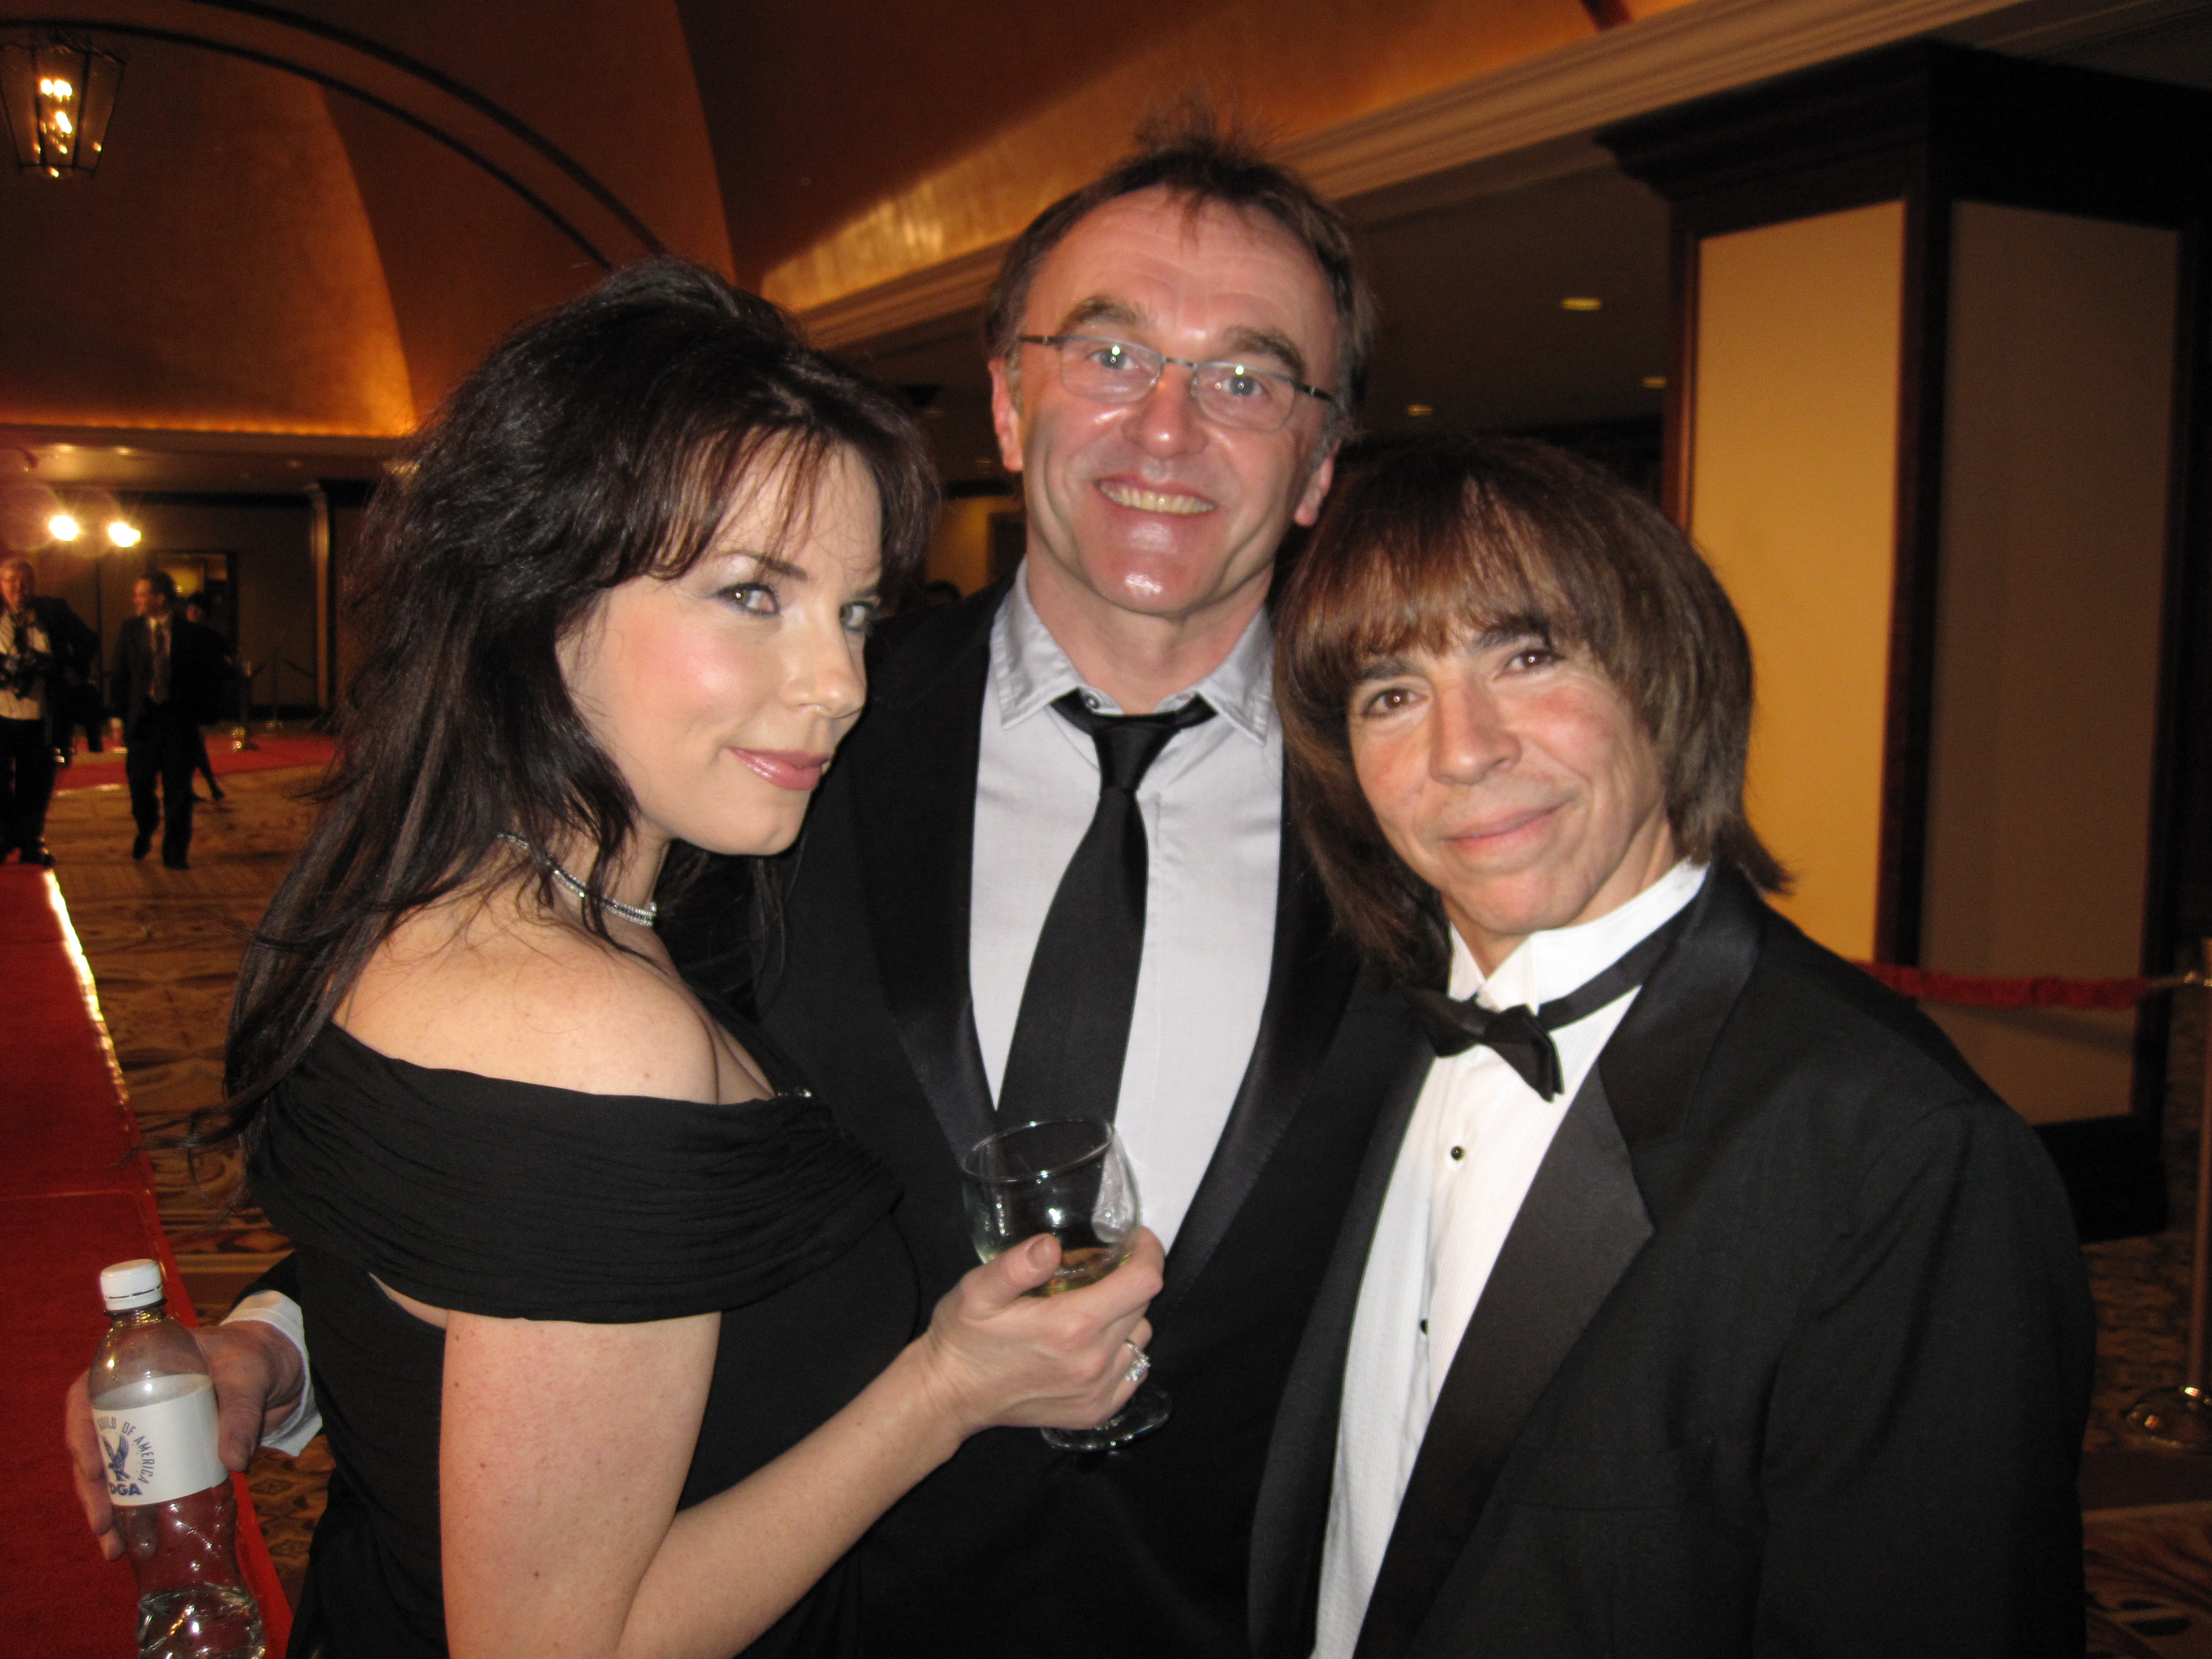 Lisa K.Crosato,Danny Boyle and Nunzio Fazio at the DGA awards.